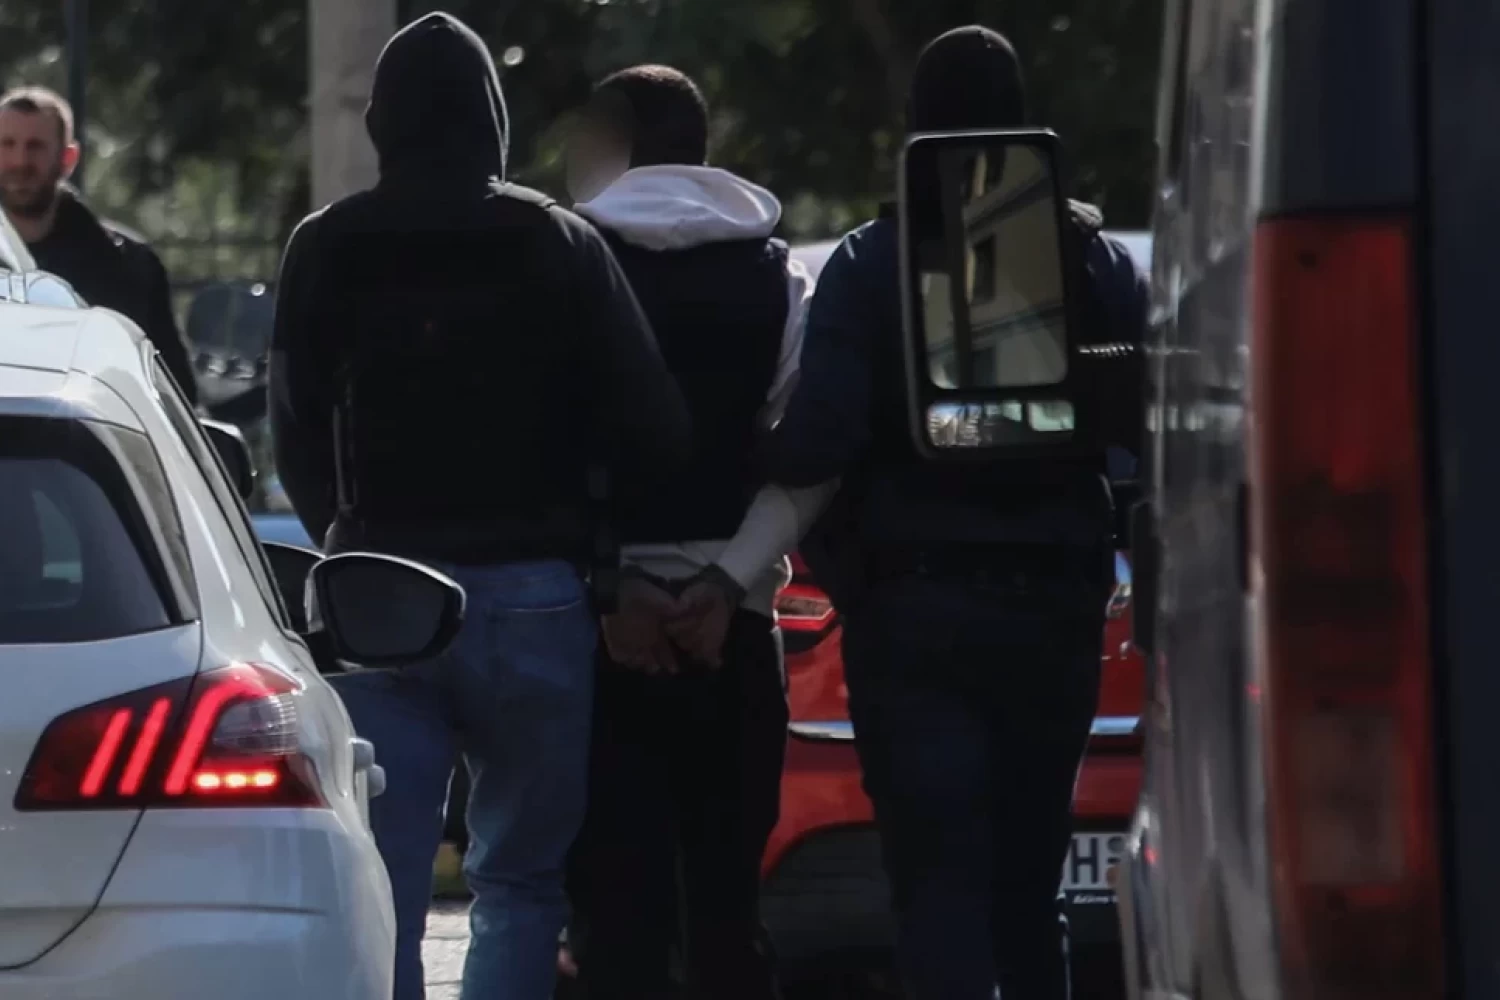 Greek Mafia: Στη δημοσιότητα από την ΕΛ.ΑΣ. τα στοιχεία 8 συλληφθέντων για δολοφονίες και εμπρησμούς